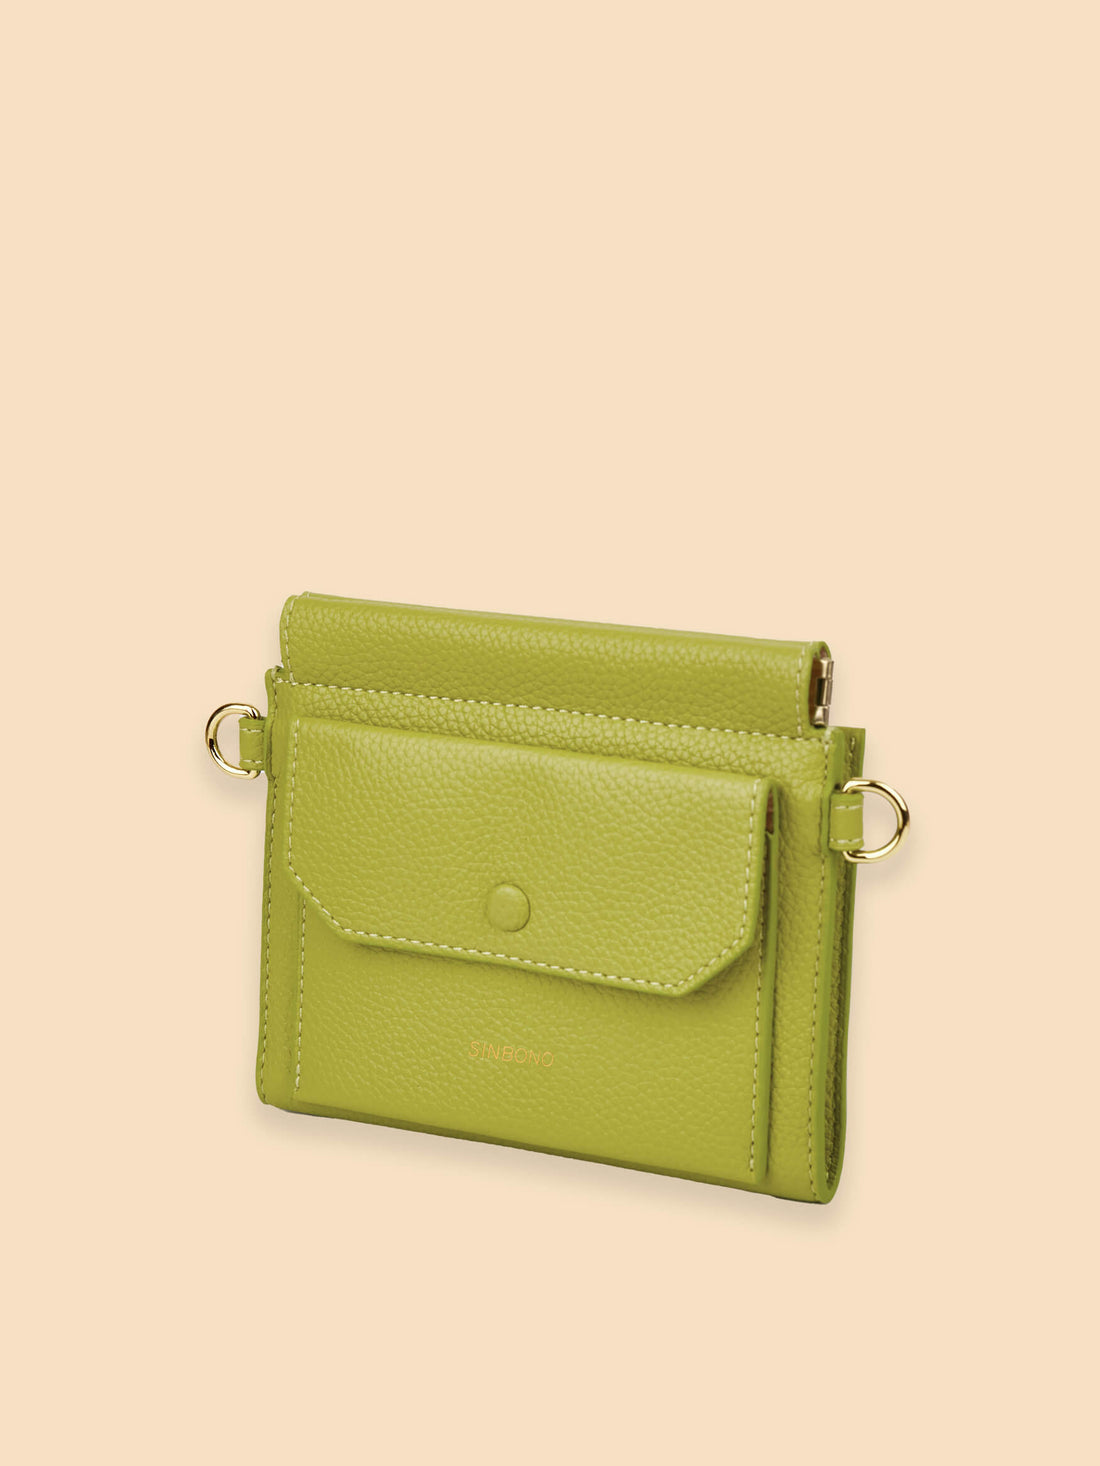 SINBONO  Lime Green Crossbody Bag- High-quality Soft Vegan Leather Bag